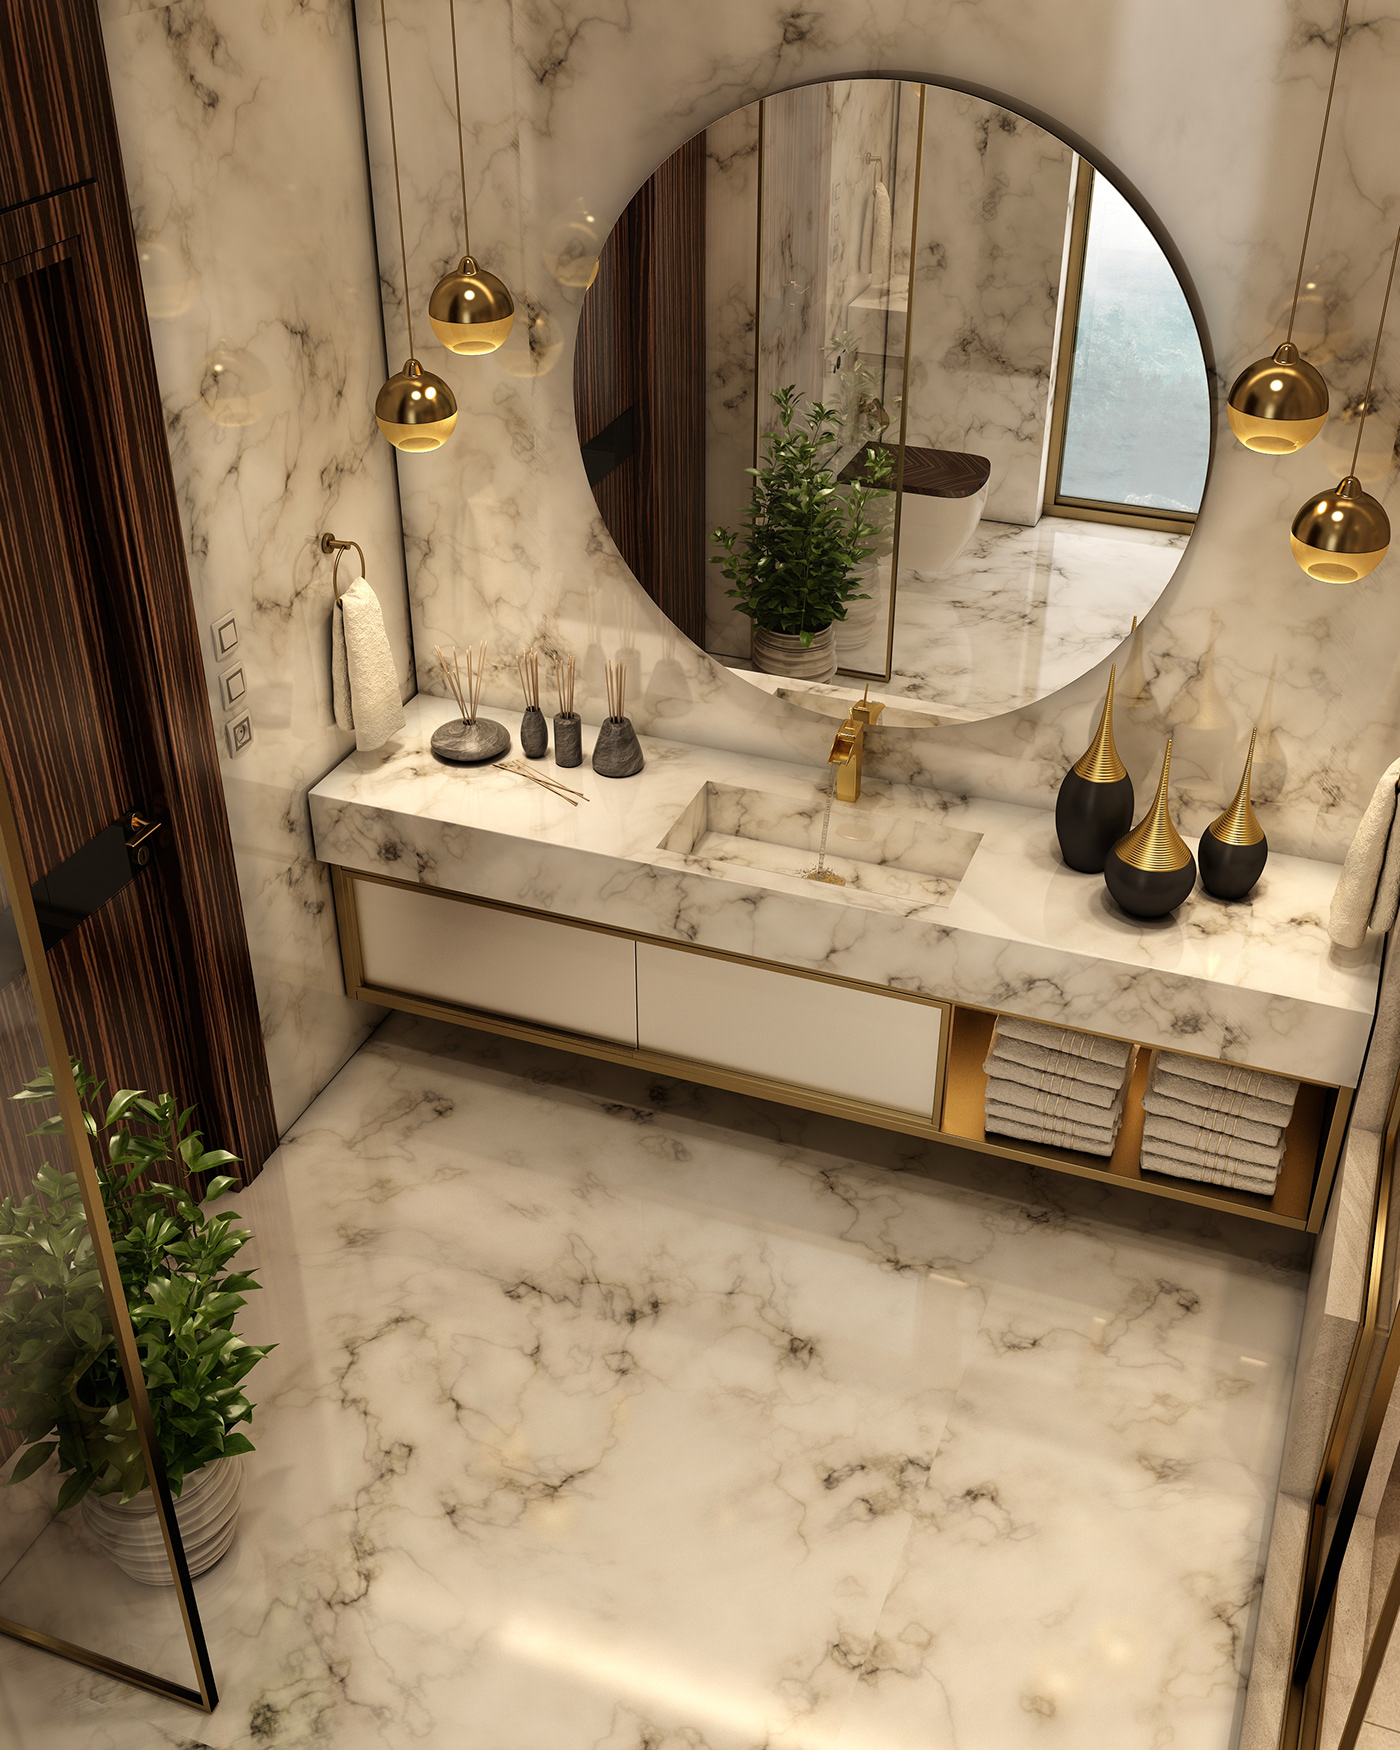 interior design  bathroom modern Villa toilet 3D architecture Render visualization vray